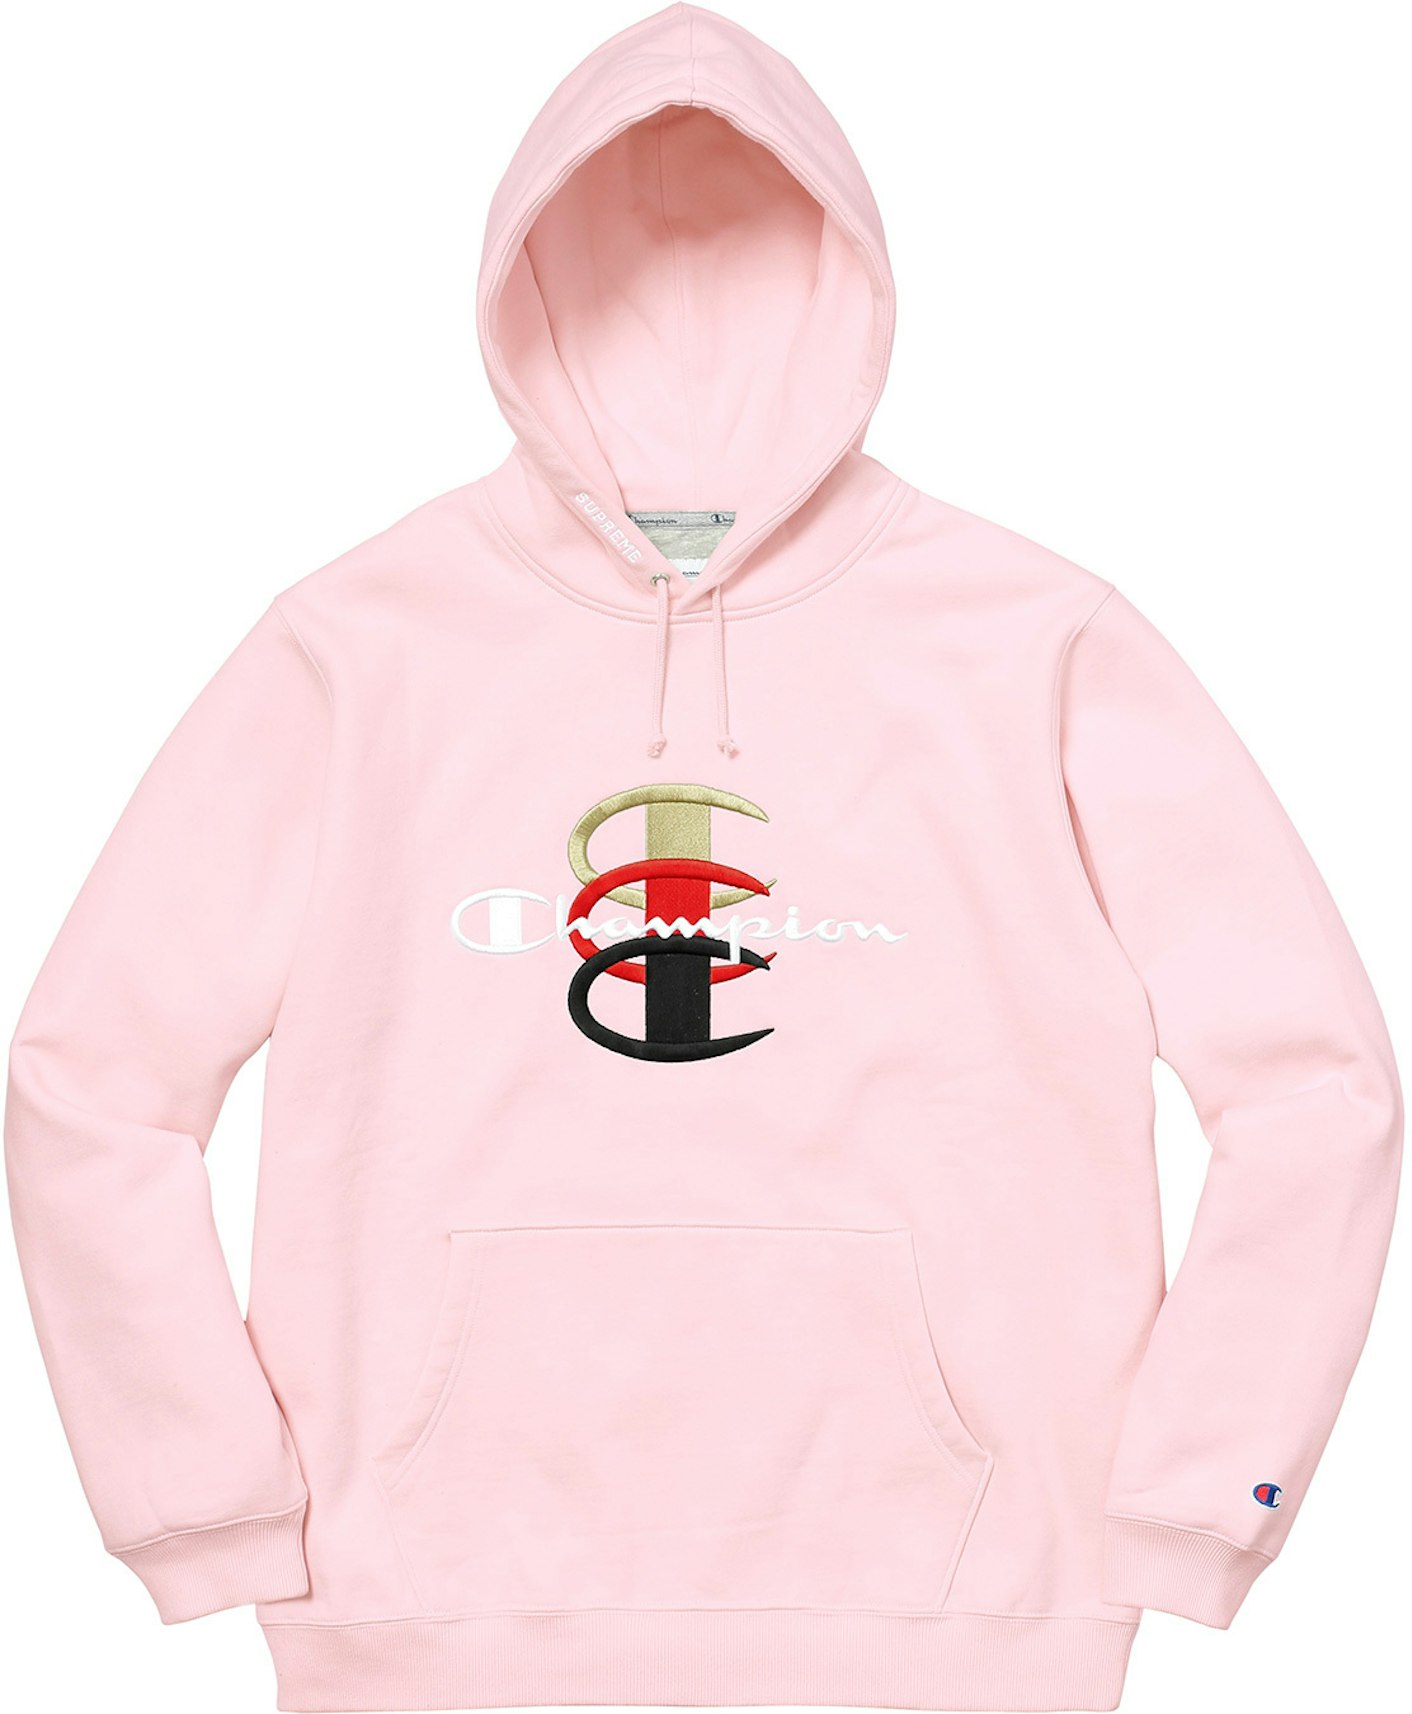 Merchandising Jeg klager utilfredsstillende Supreme Champion Stacked C Hooded Sweatshirt Light Pink - FW17 Men's - US